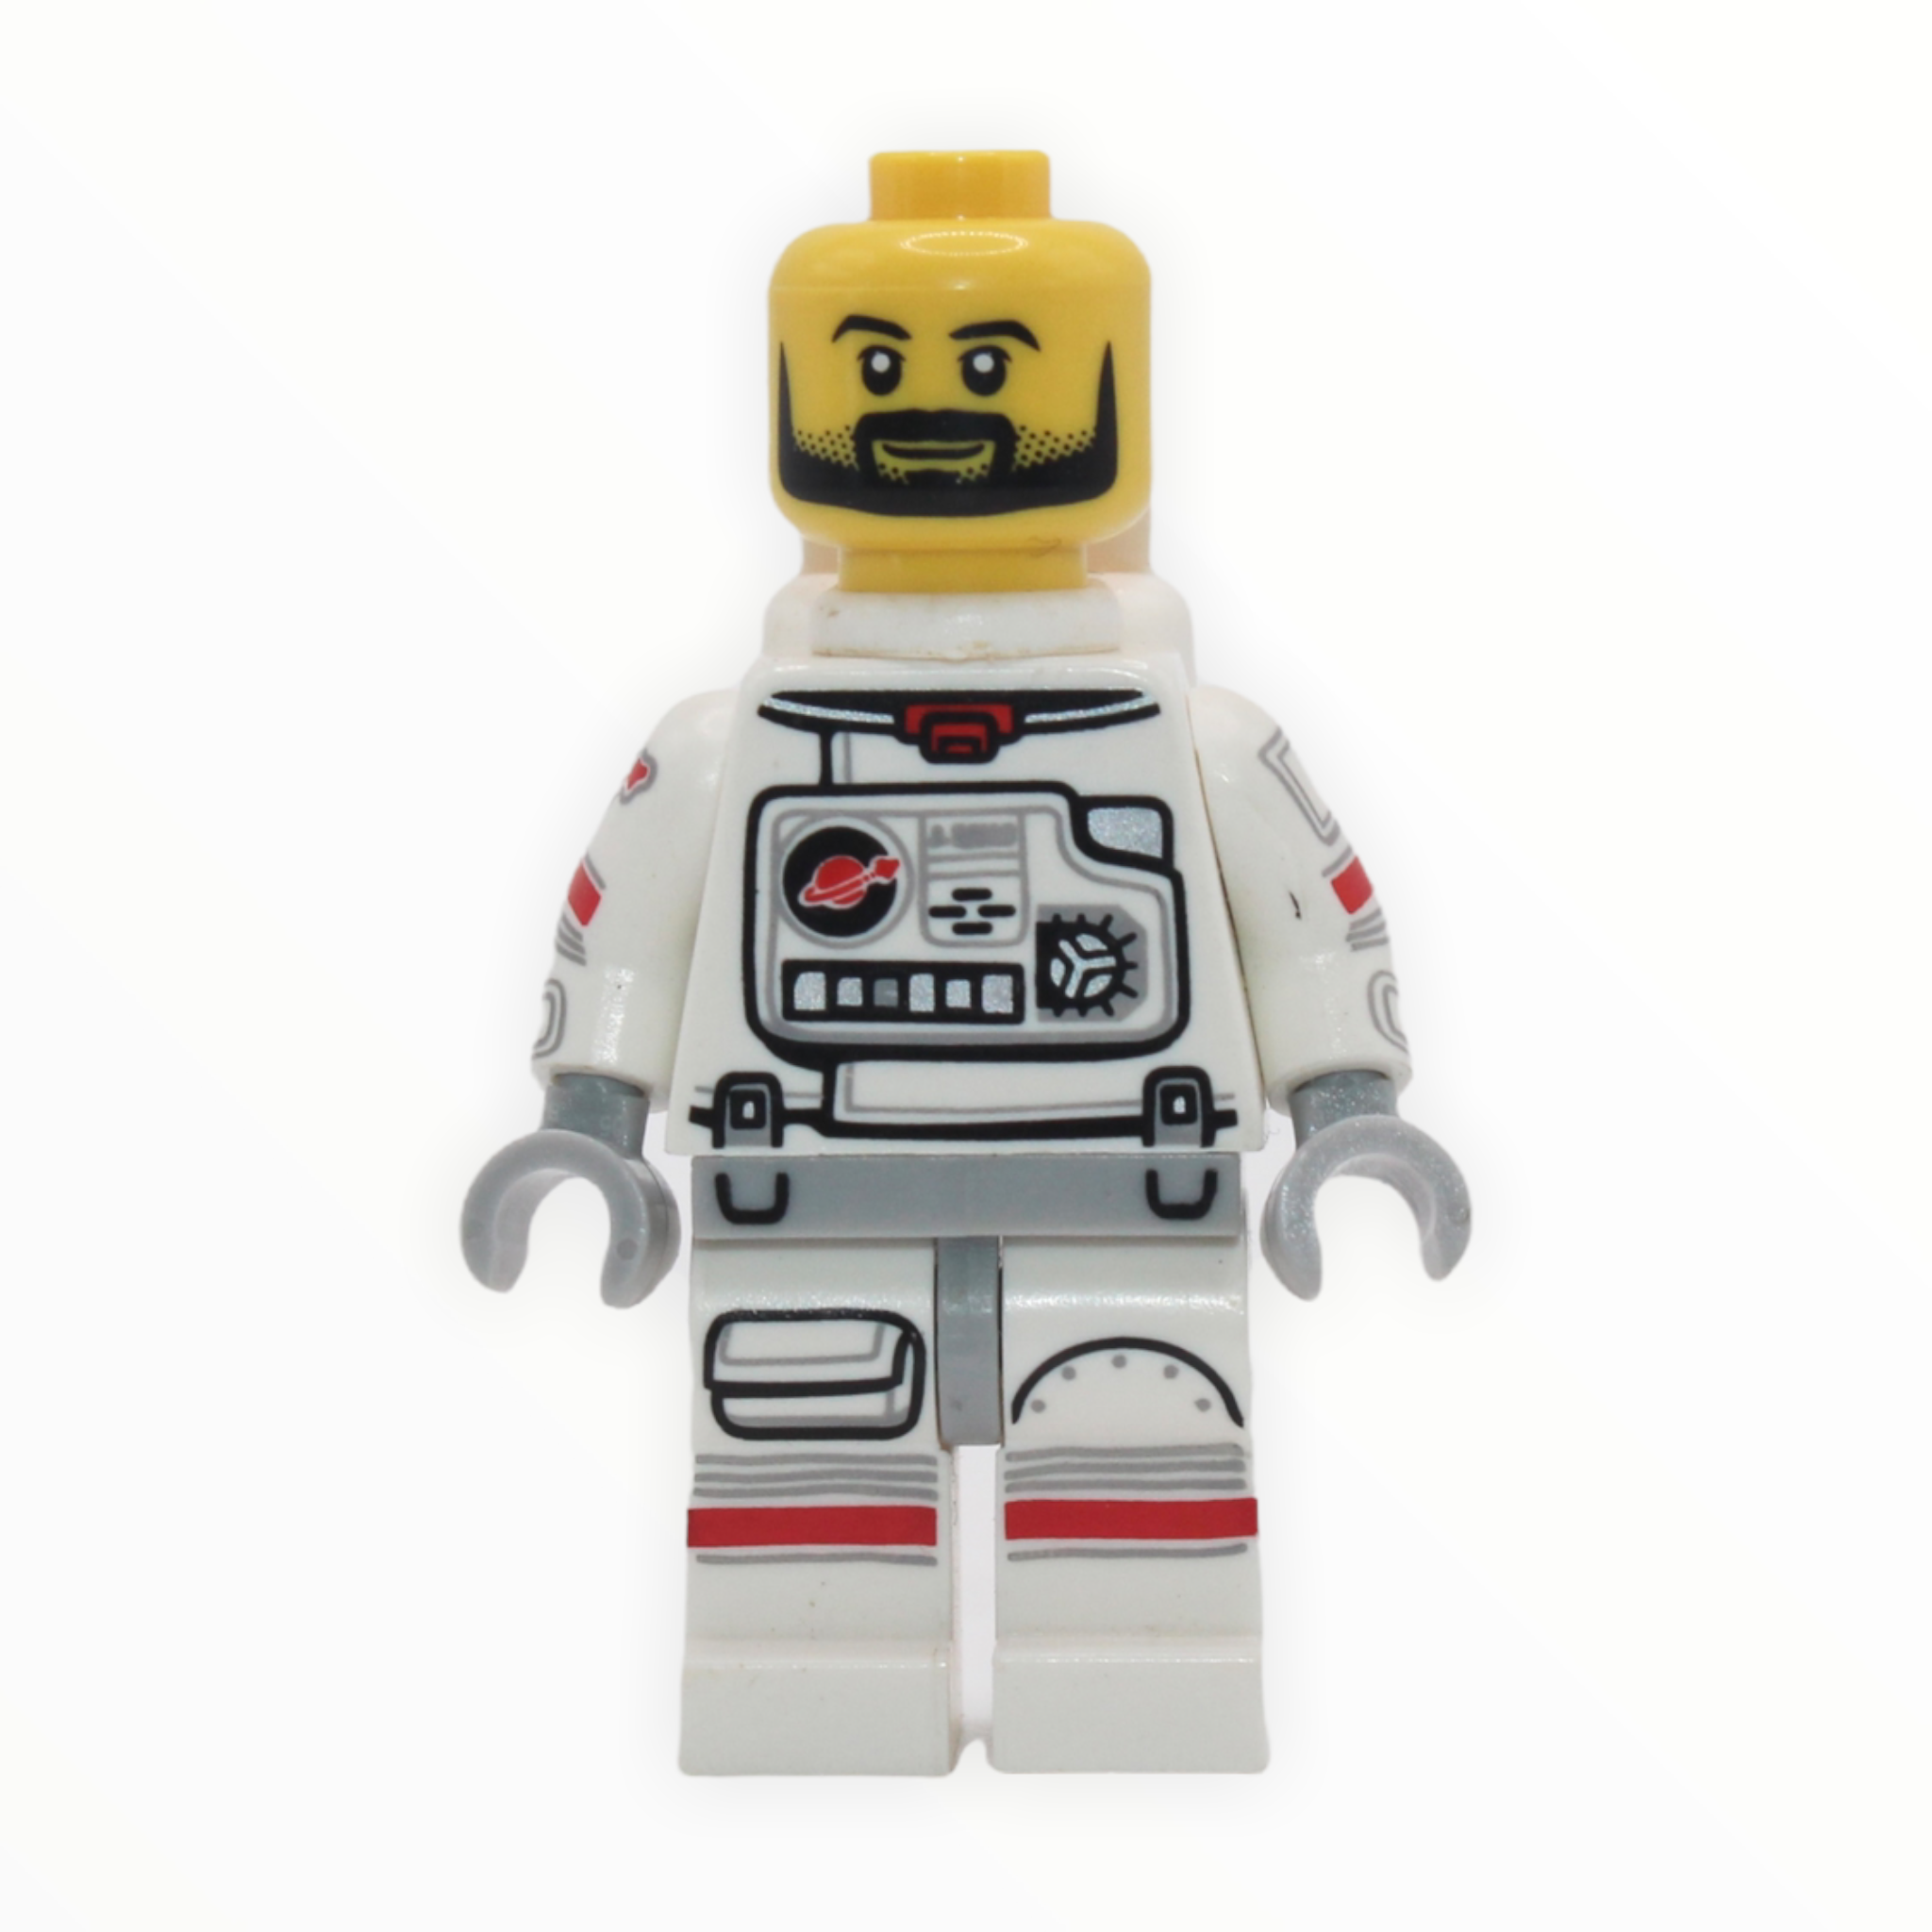 Series 15: Astronaut